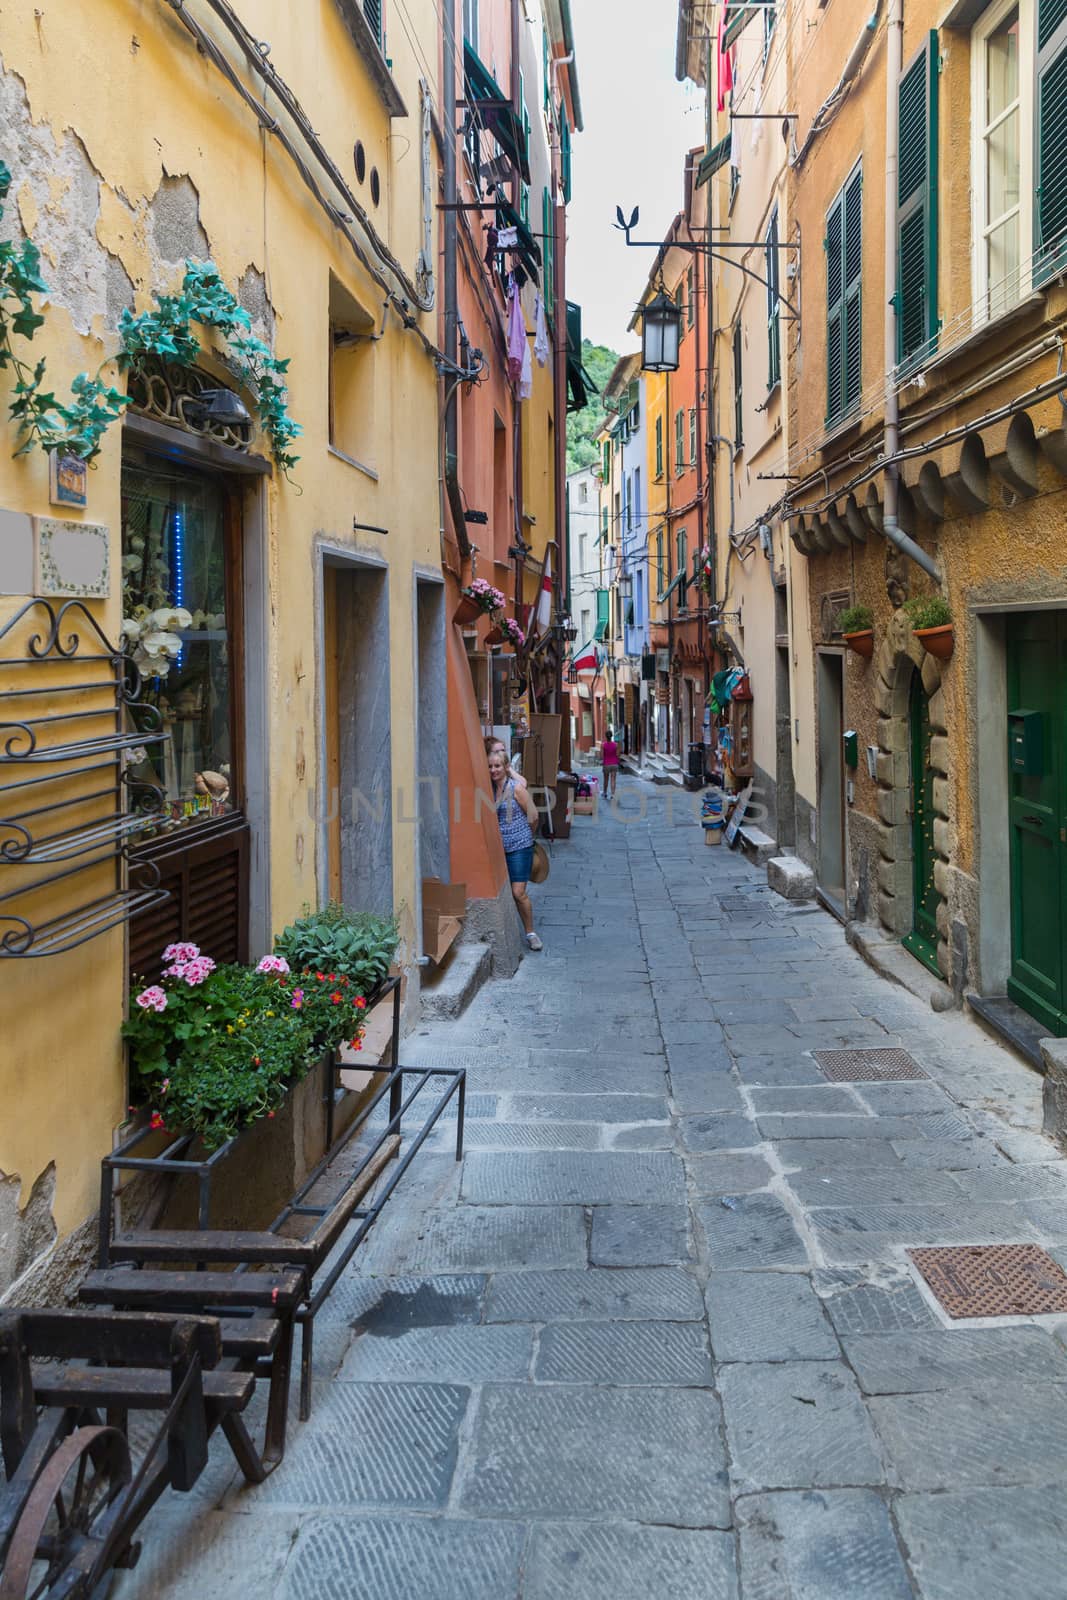 Street in Portovenere in the Ligurian region of Italy near the Cinque Terre